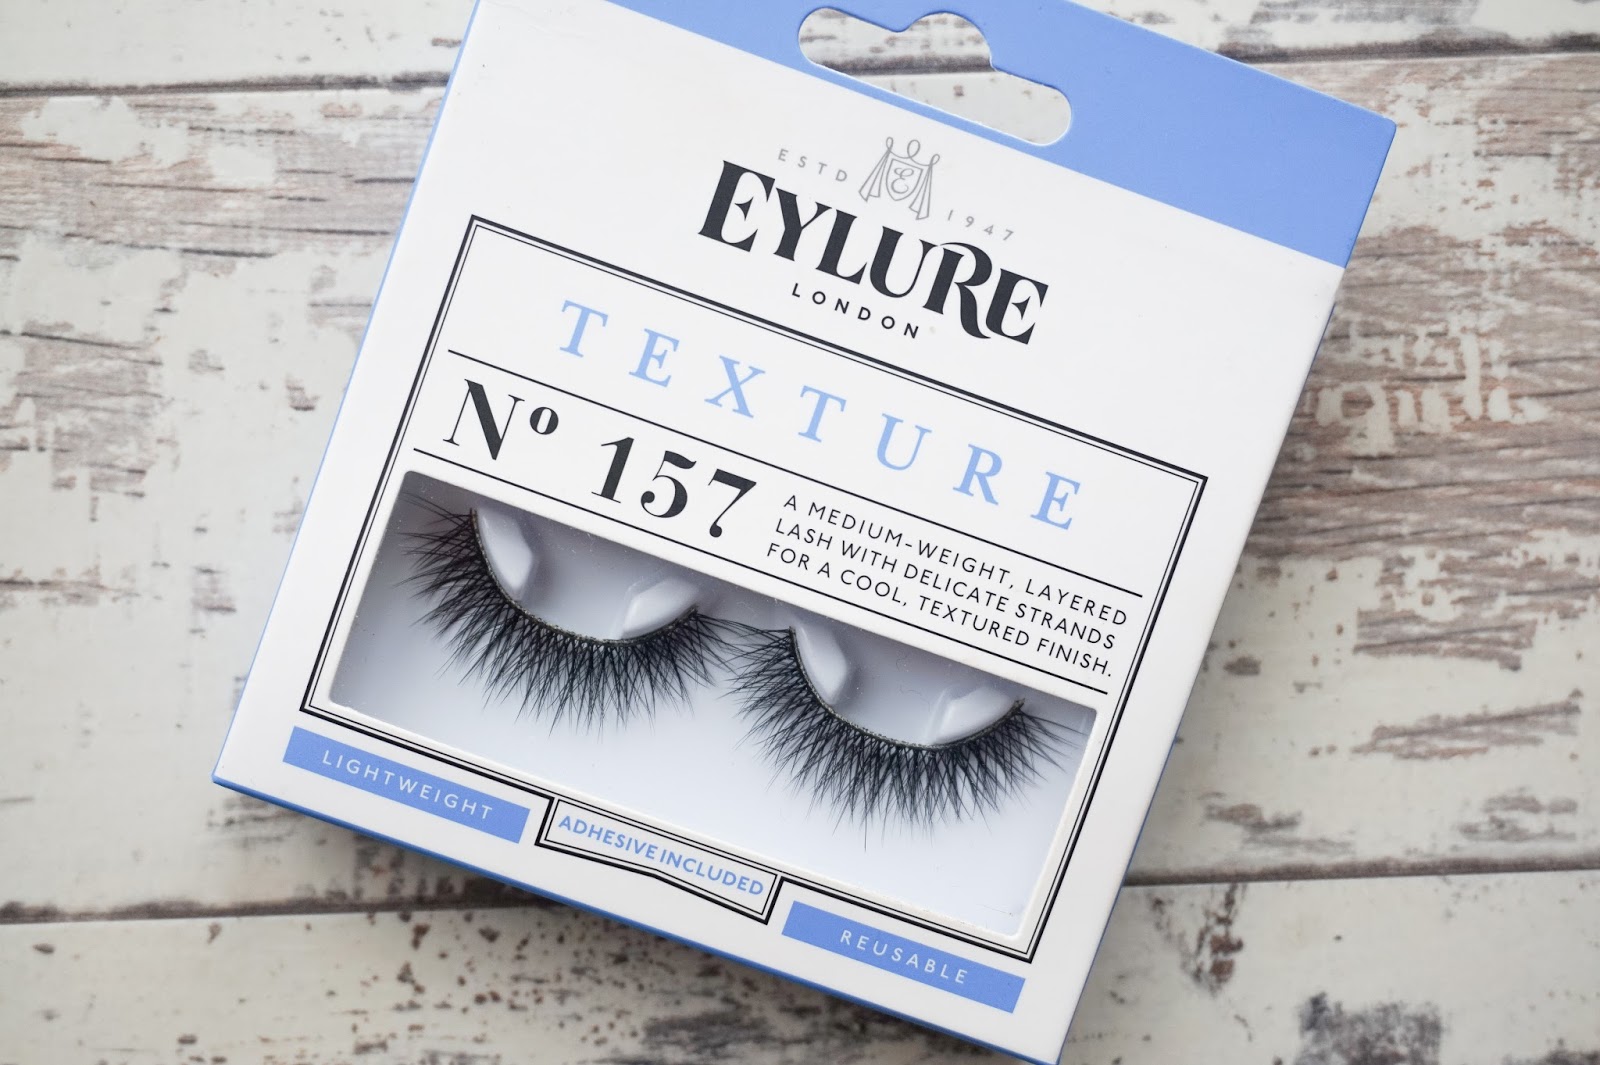 eylure 157 review vegas nay grand glamor natural lashes lengthening texture 